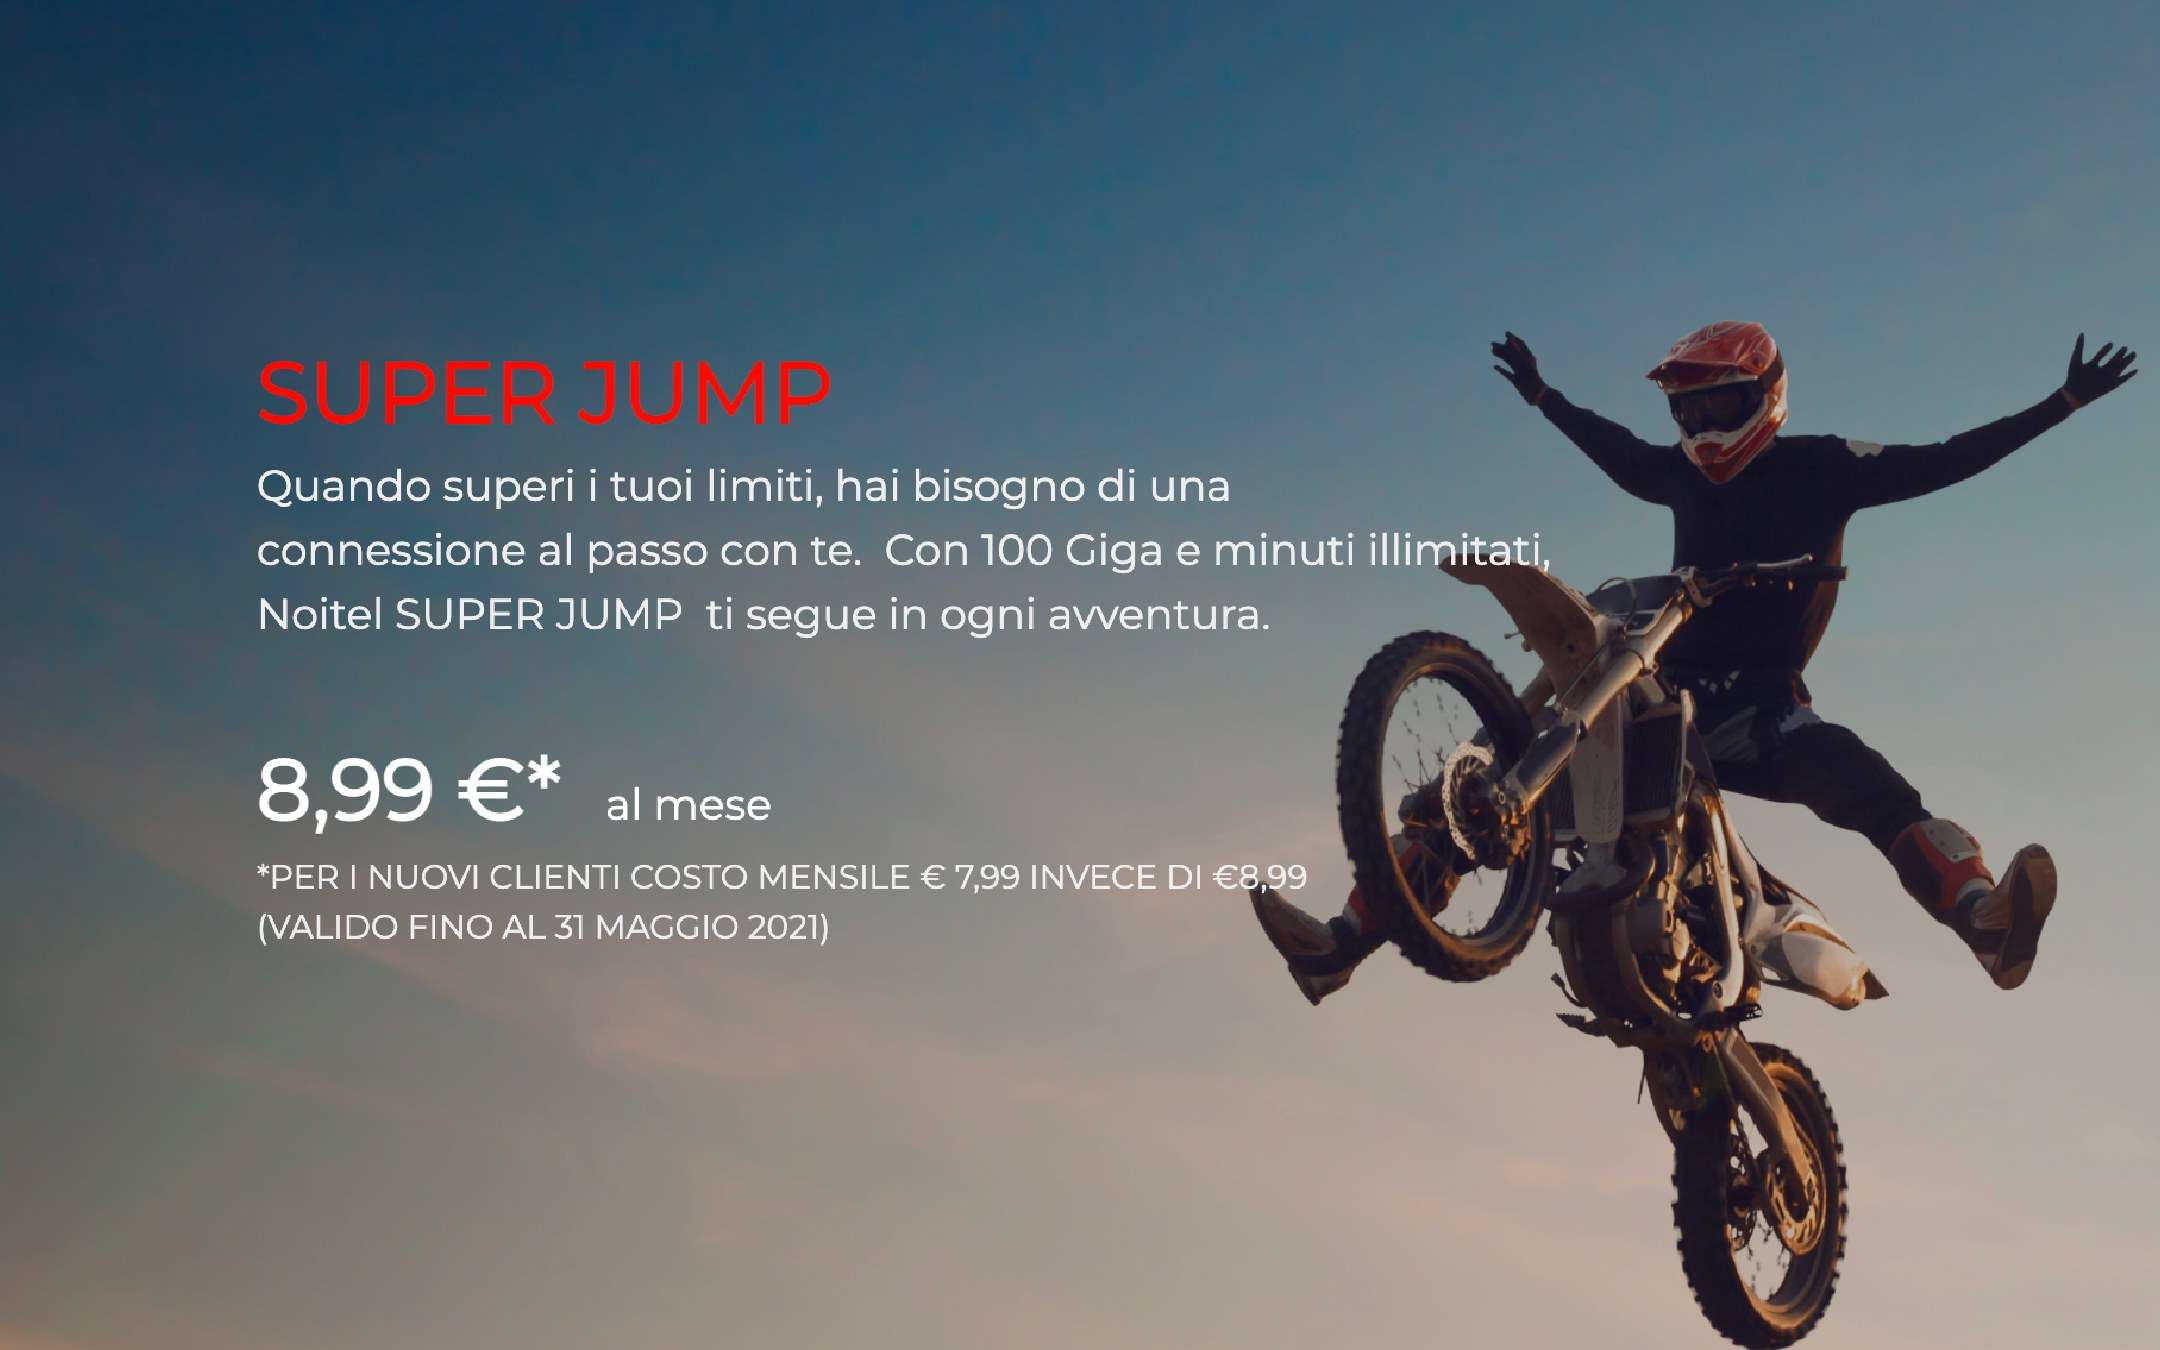 NoiTel Super Jump: 100GB a soli 7,99 euro al mese